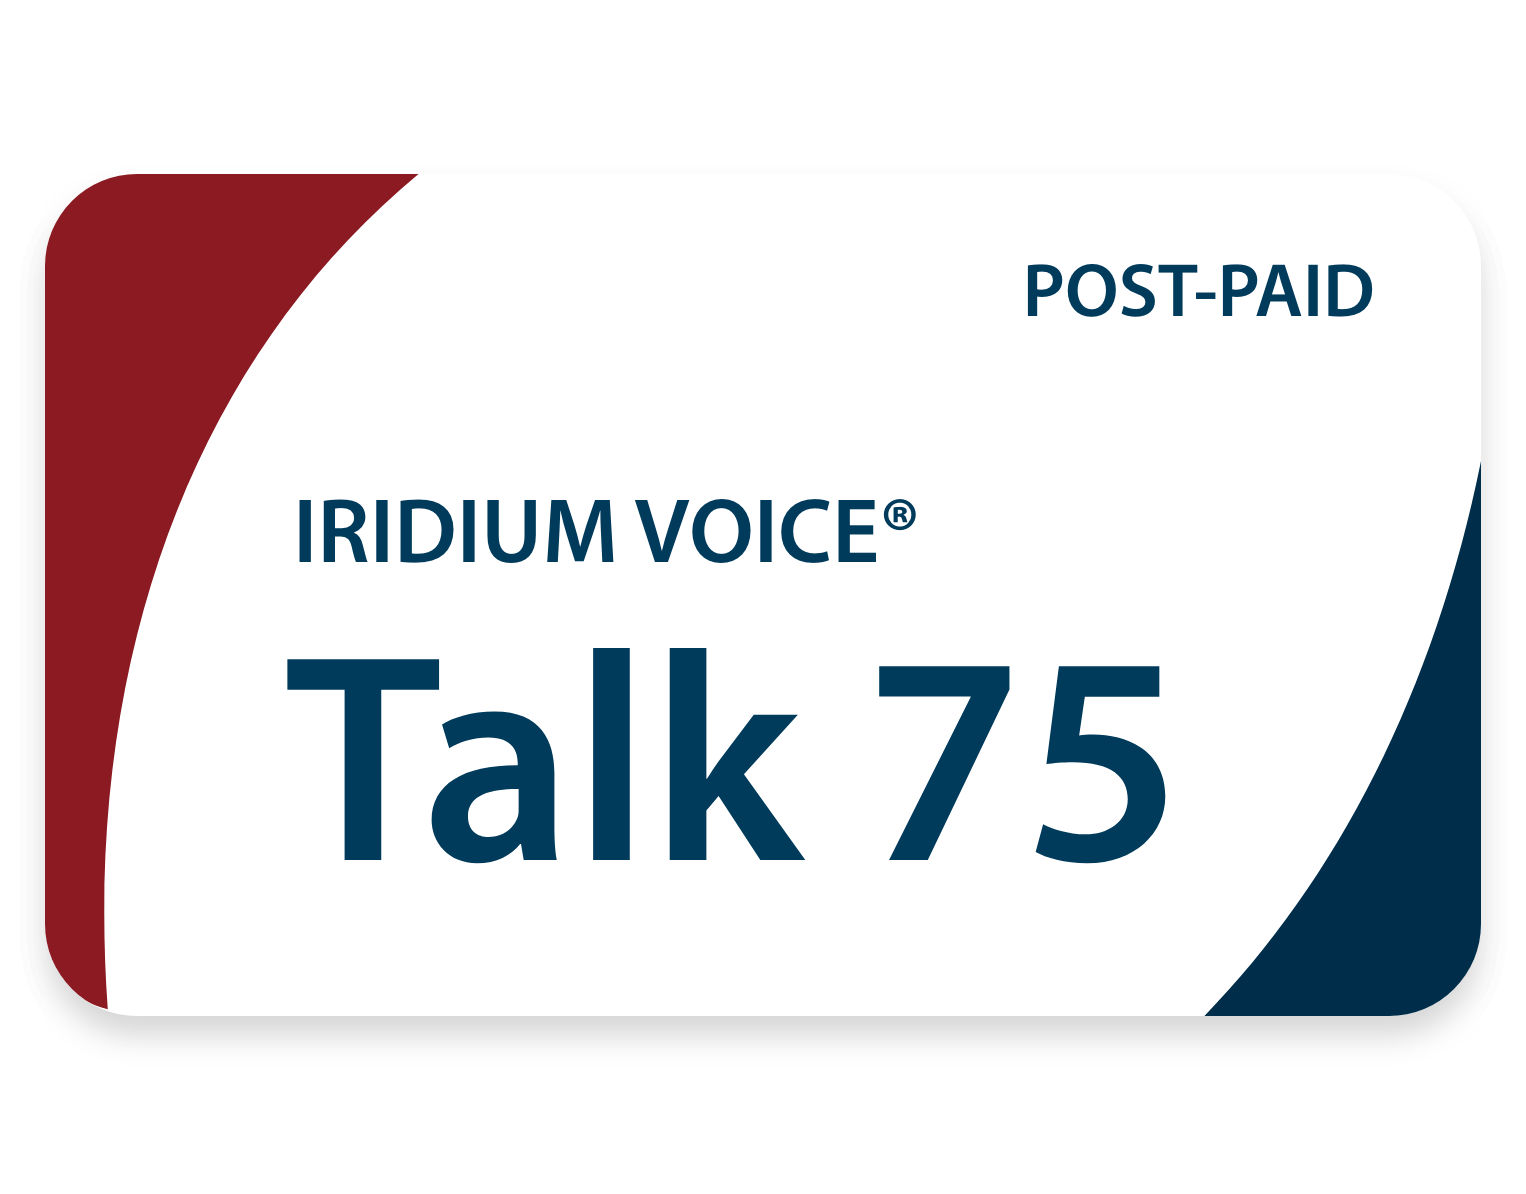 Iridium voice Post-paid Talk 75 airtime plan